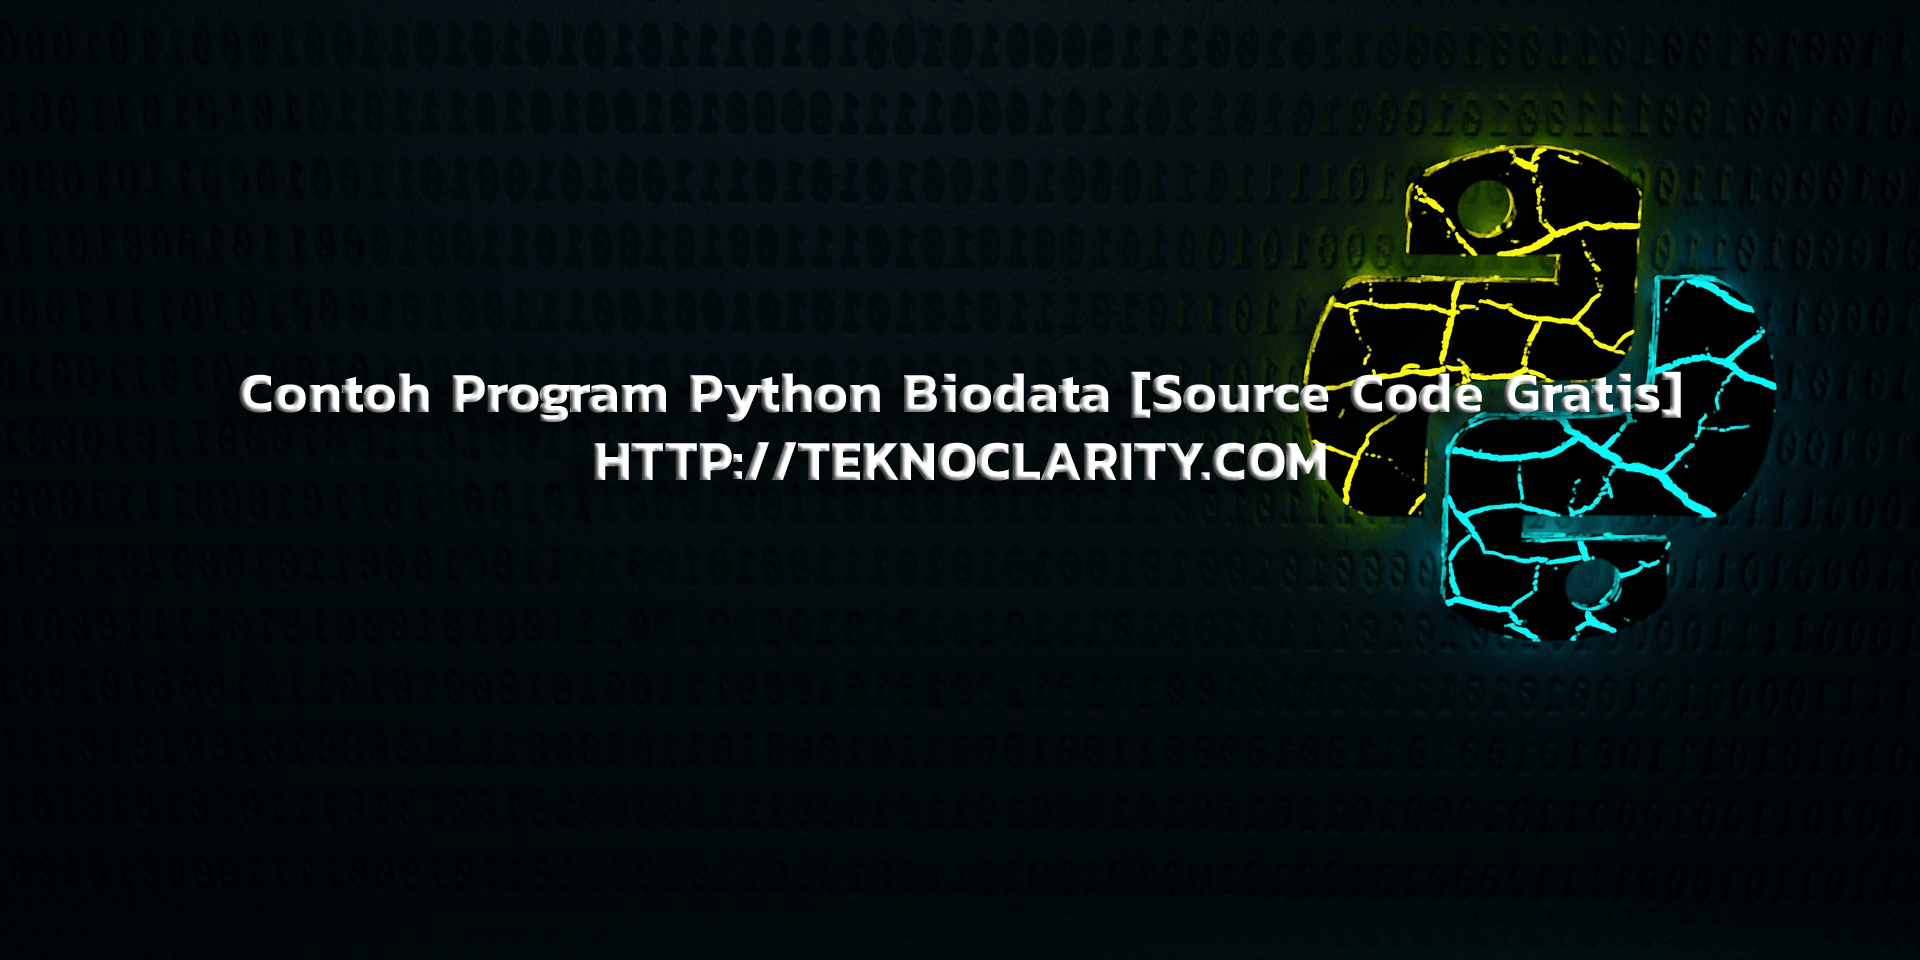 Contoh Program Python Biodata Source Code Gratis Tekno Clarity 0807